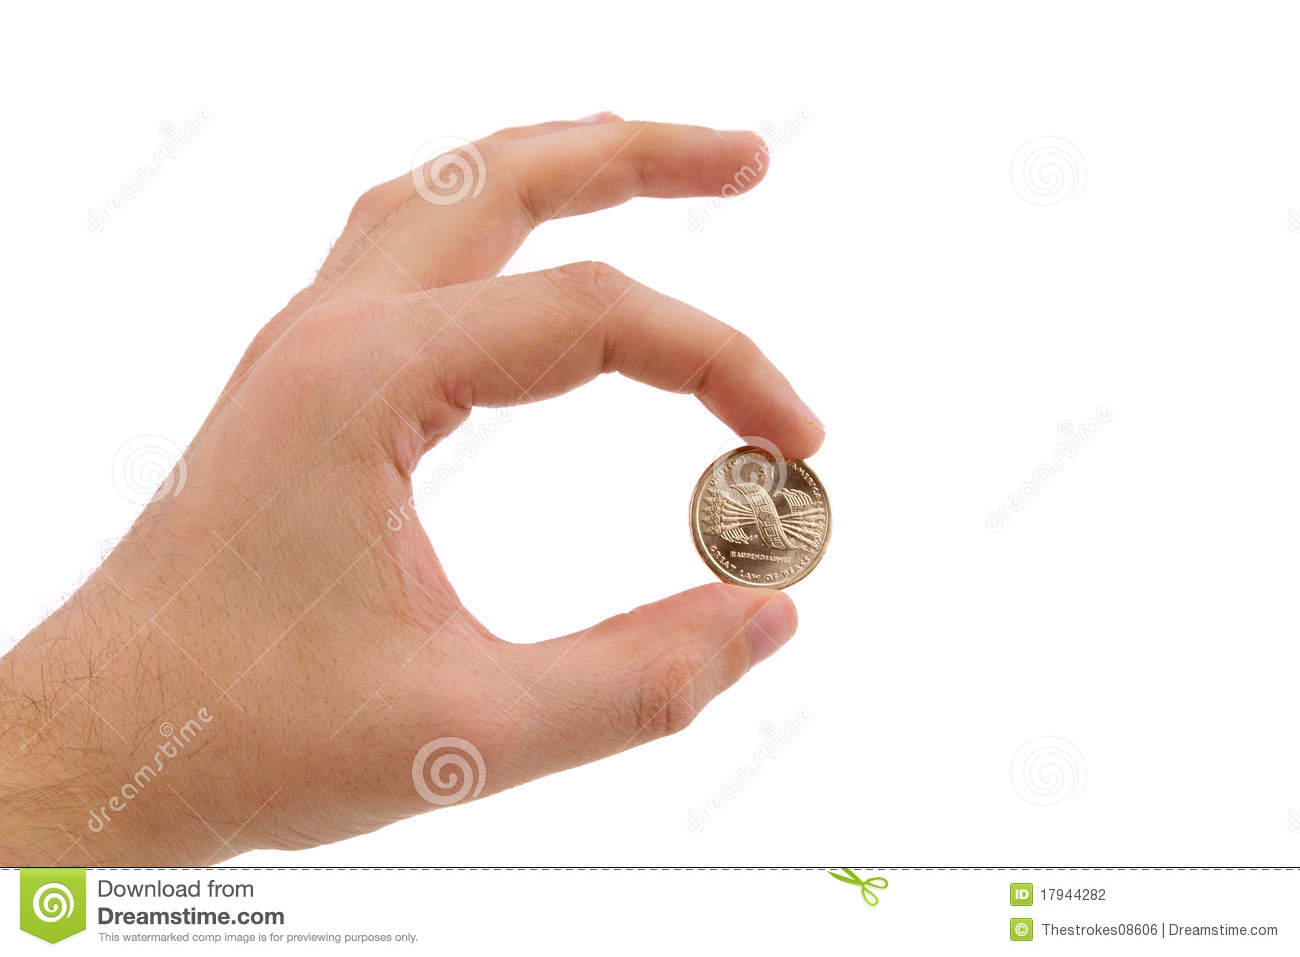 hand-holding-gold-coin-fingers-17944282.jpg